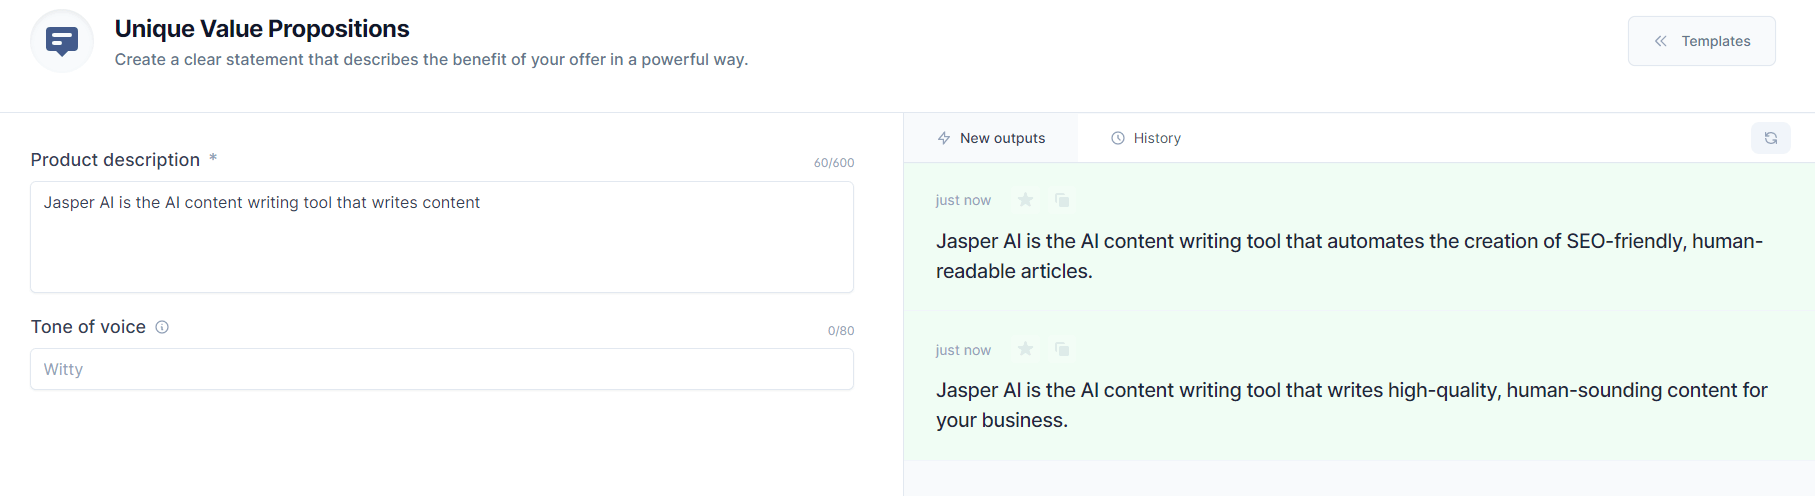 Jasper AI Proposisi Nilai Unik